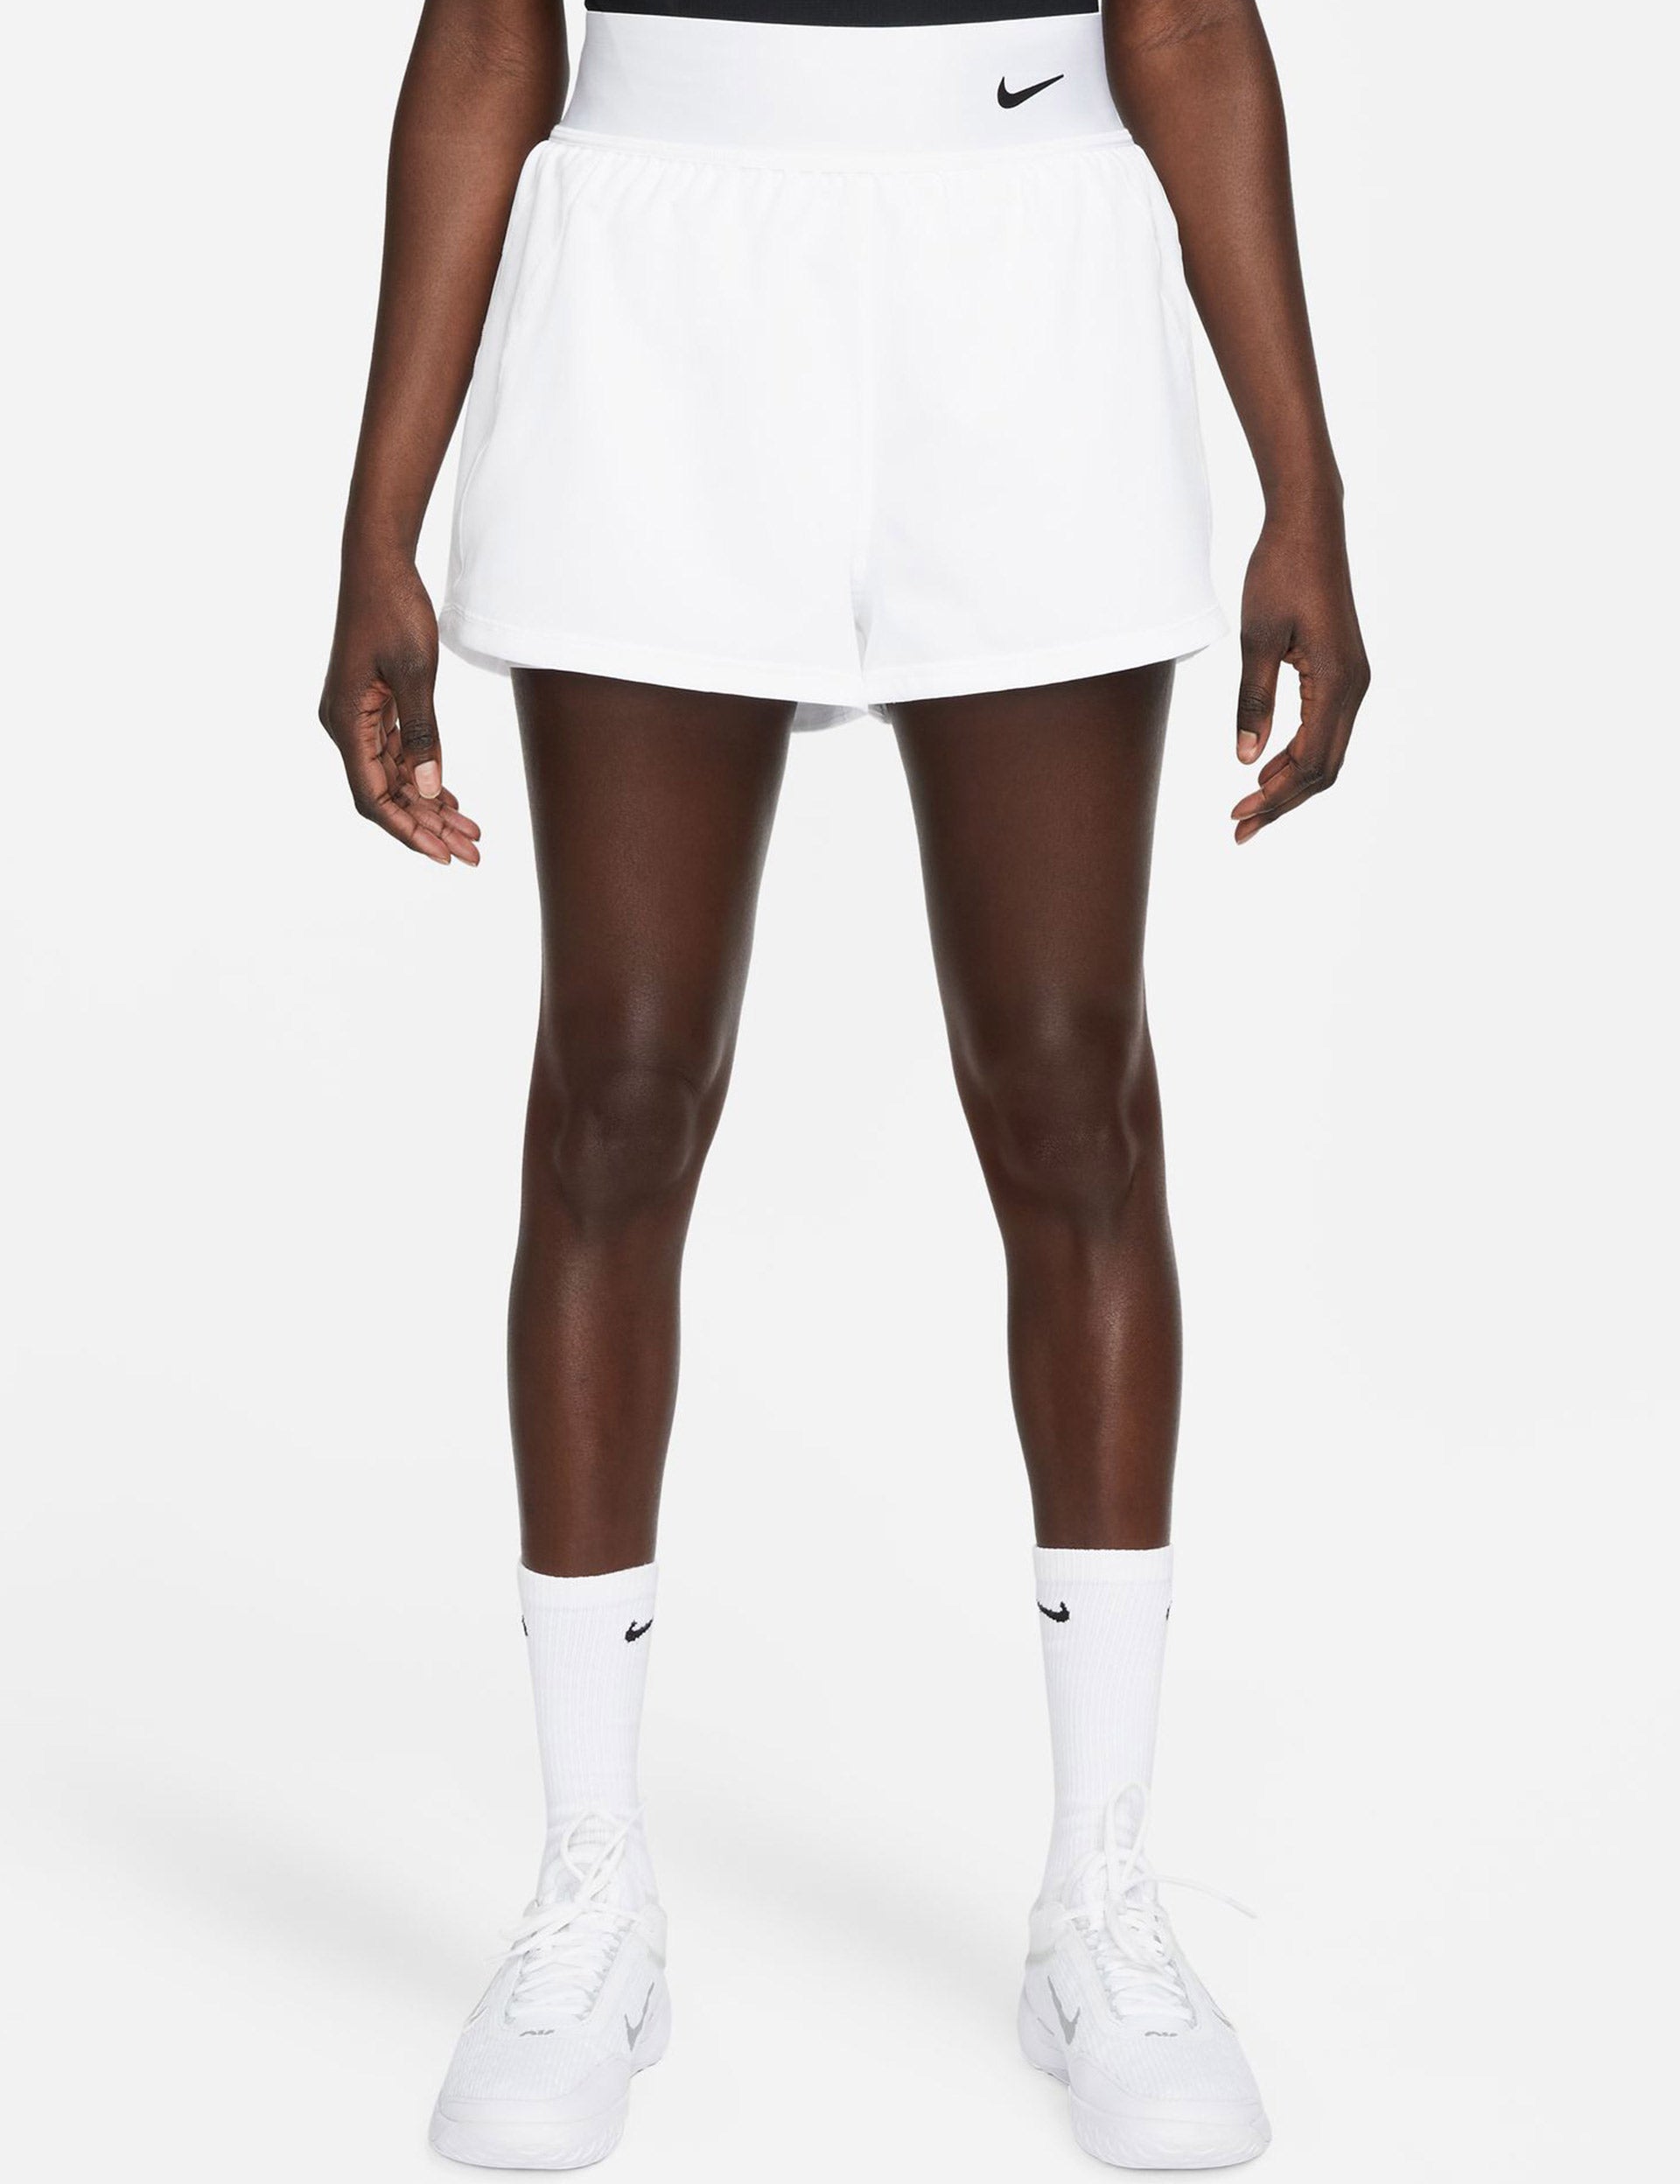 Nike NikeCourt Dri-FIT Advantage Tennis Shorts - White/Blackimages1- The Sports Edit